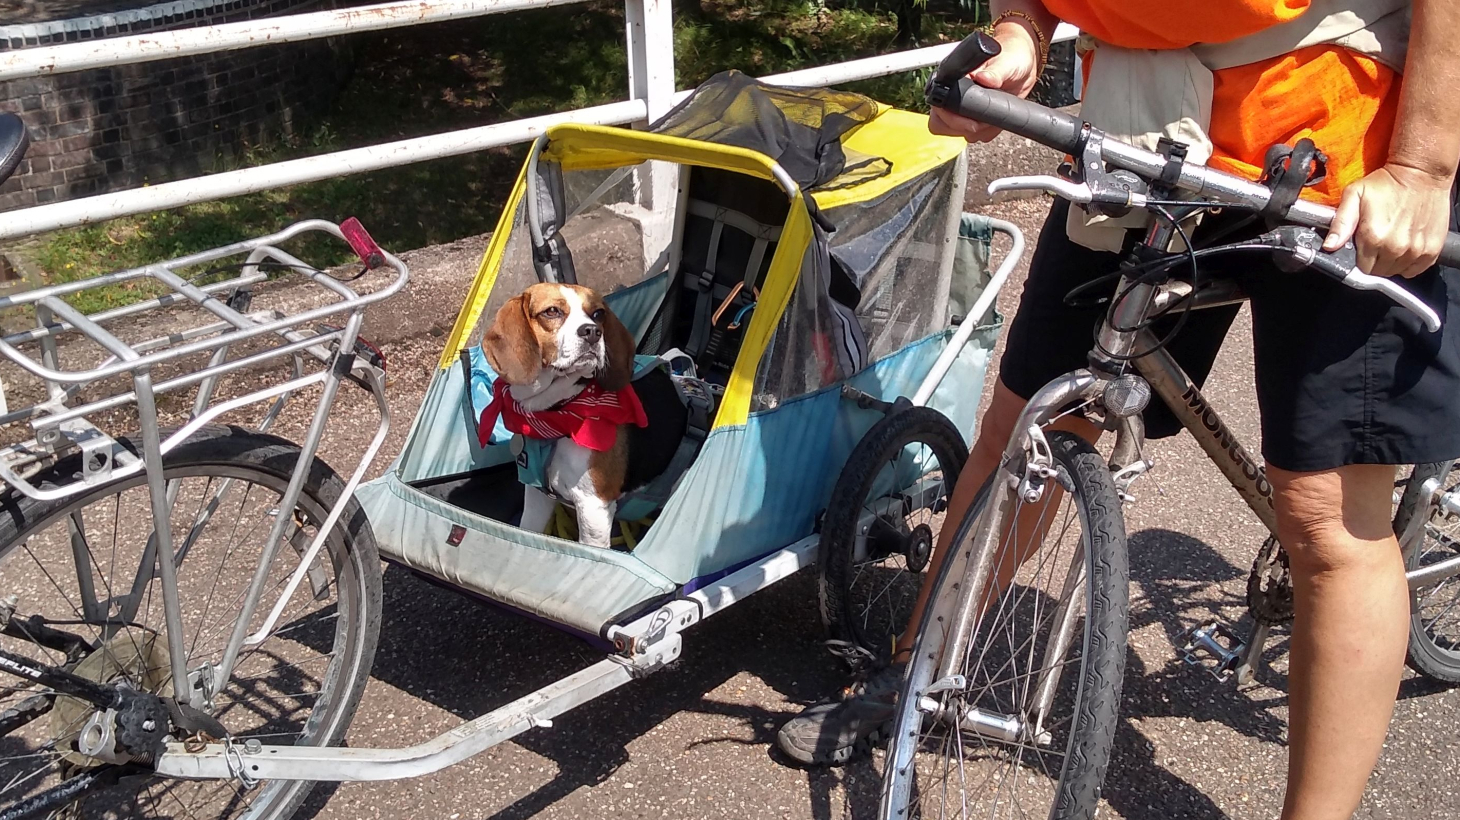 can you put dog in a human bike trailer